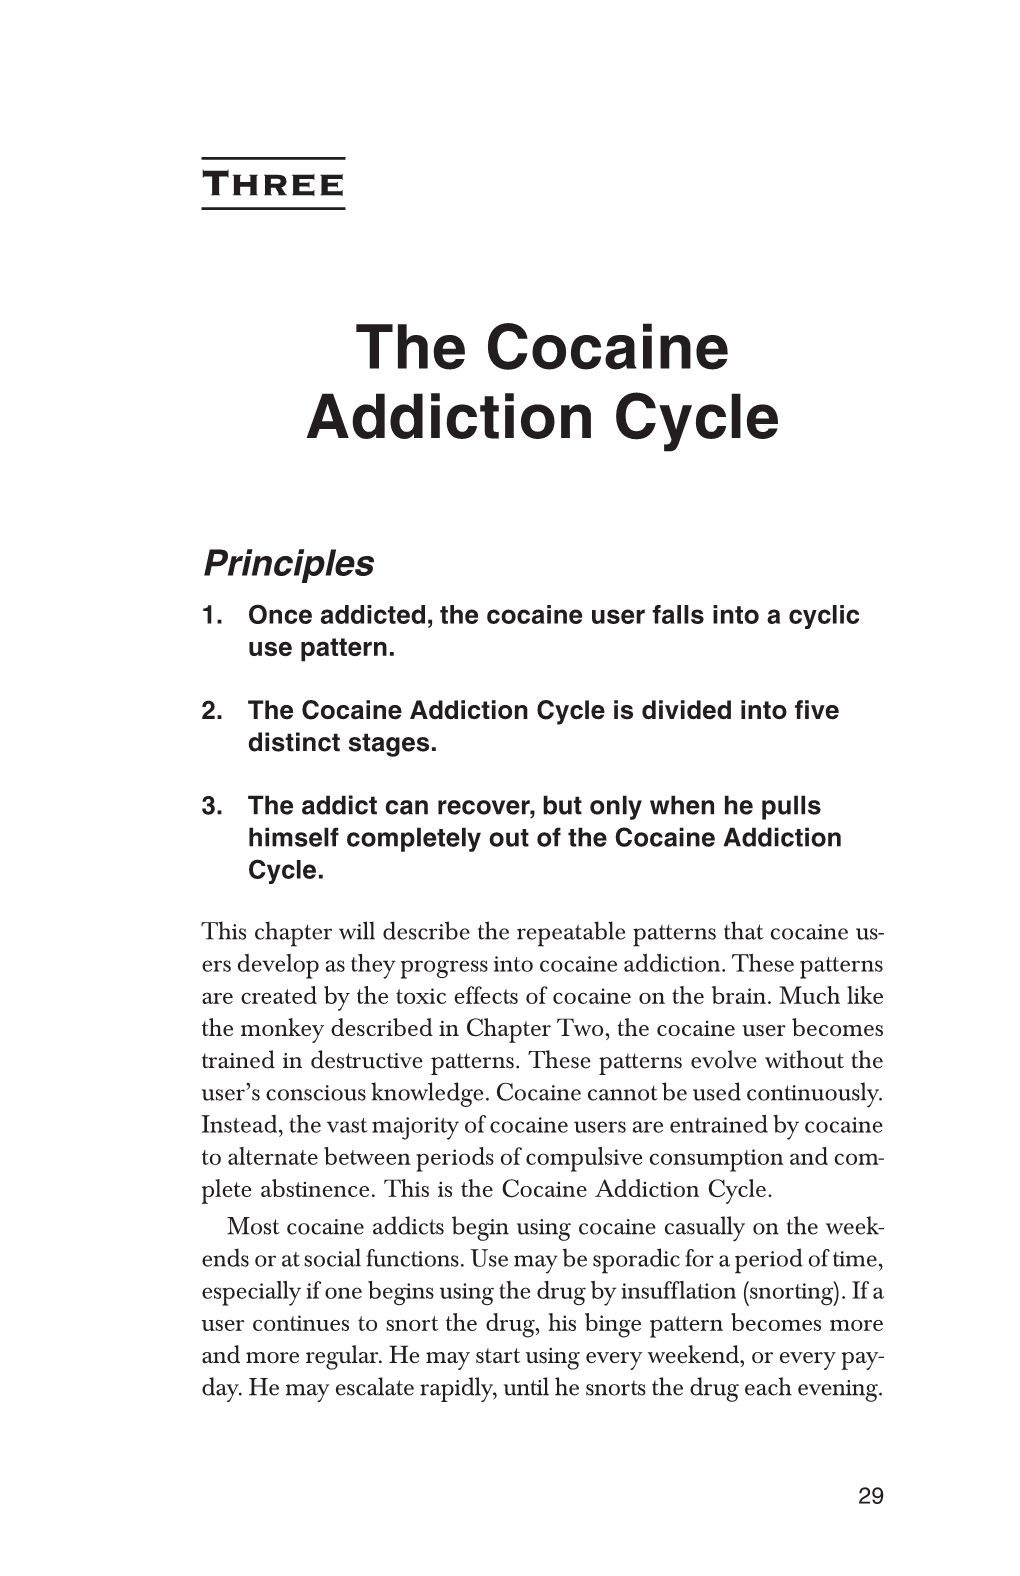 The Cocaine Addiction Cycle